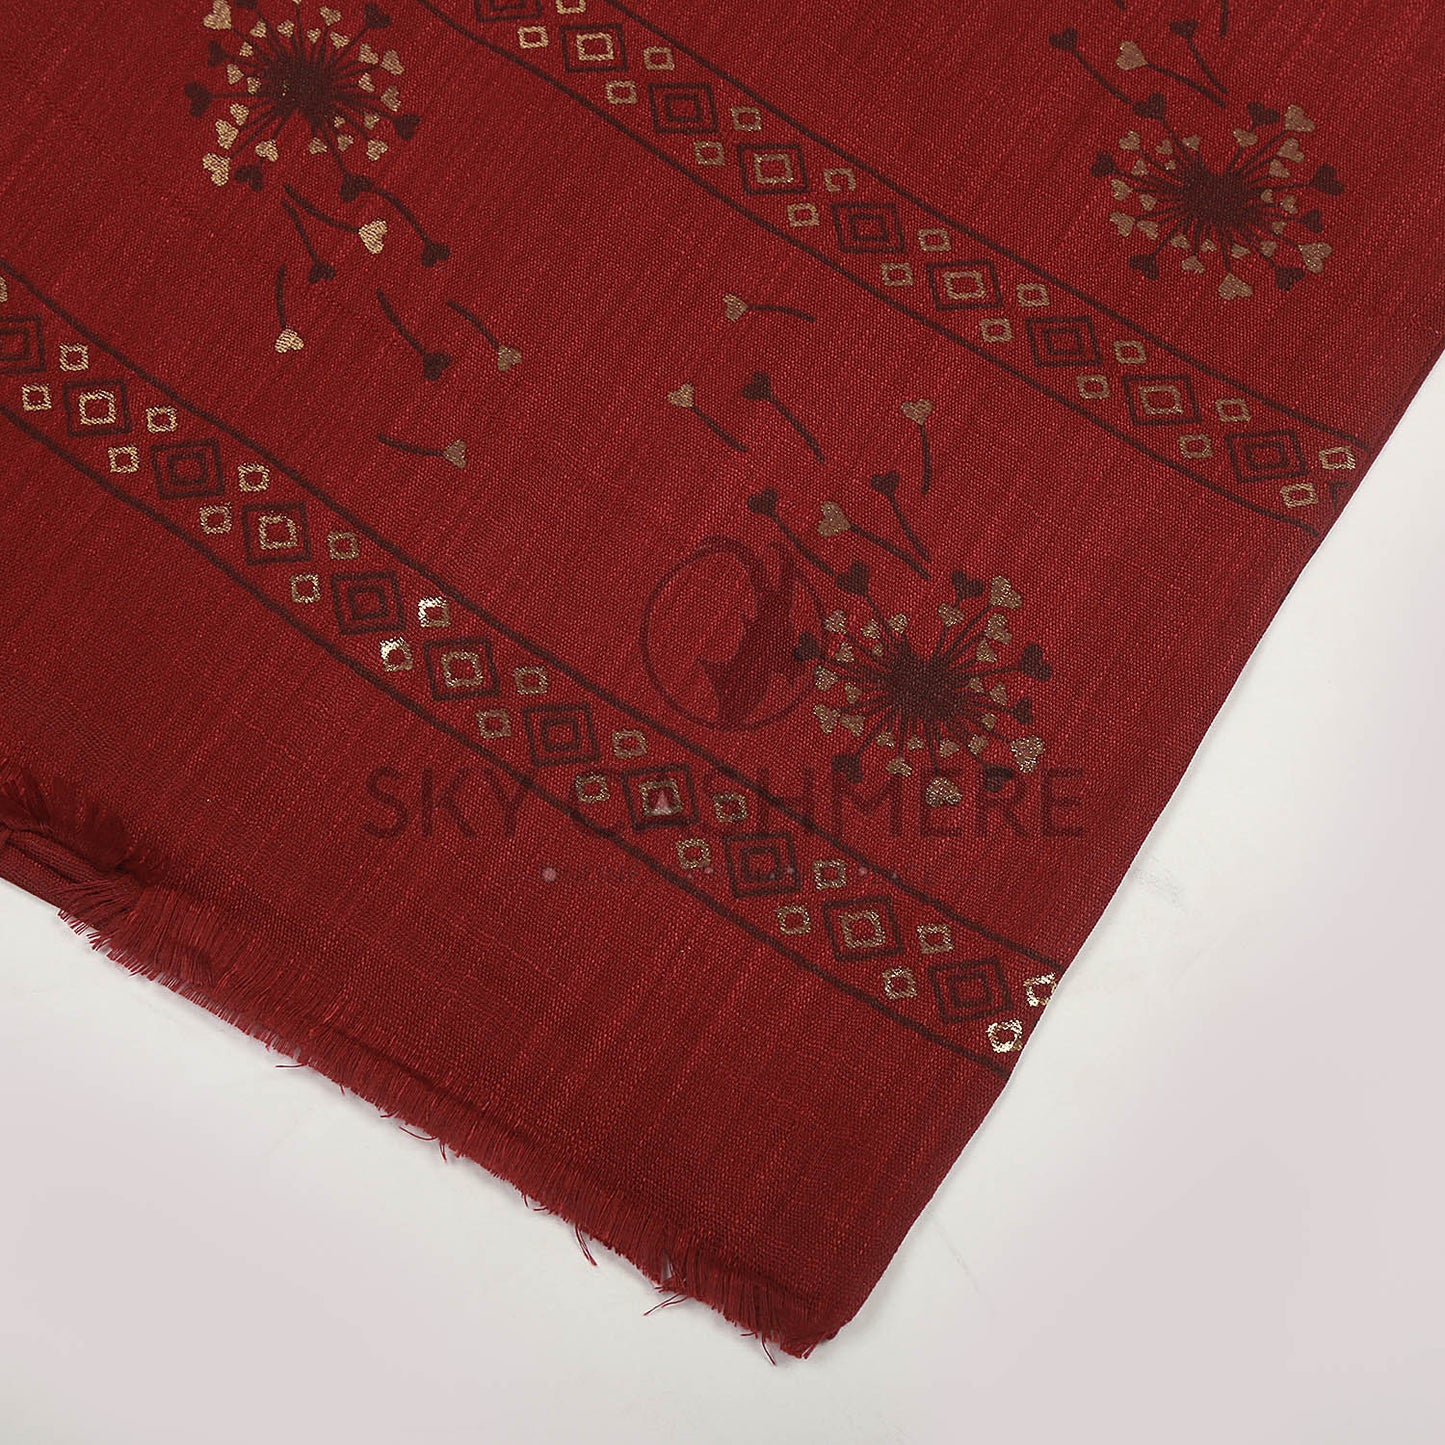 Turkish lawn scarf with blog print - Maroon